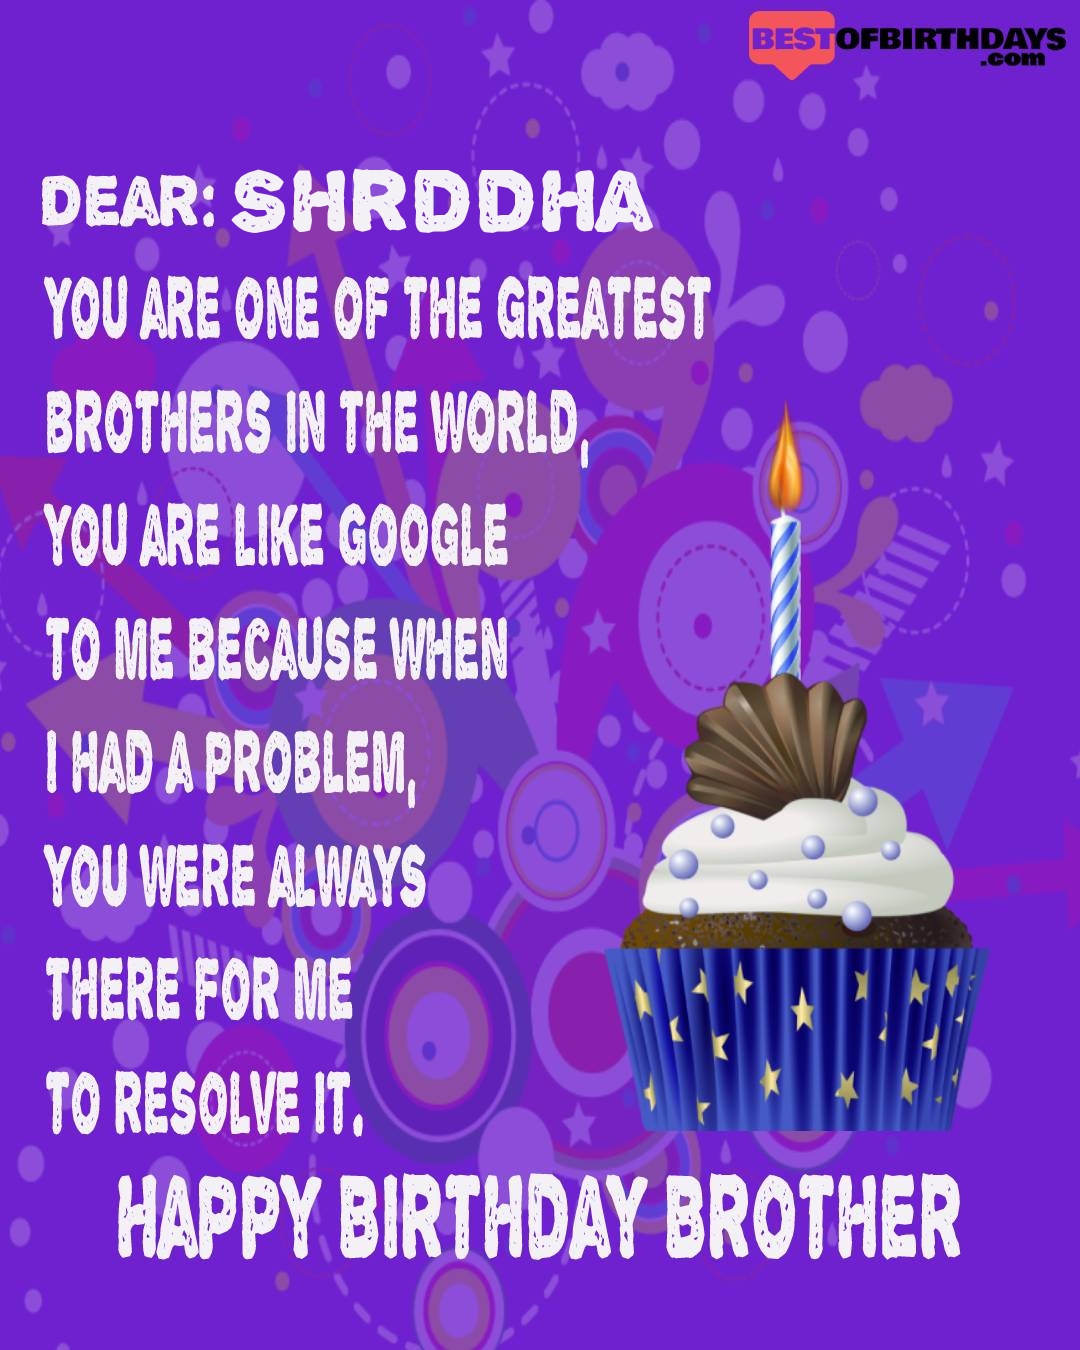 Happy birthday shrddha bhai brother bro